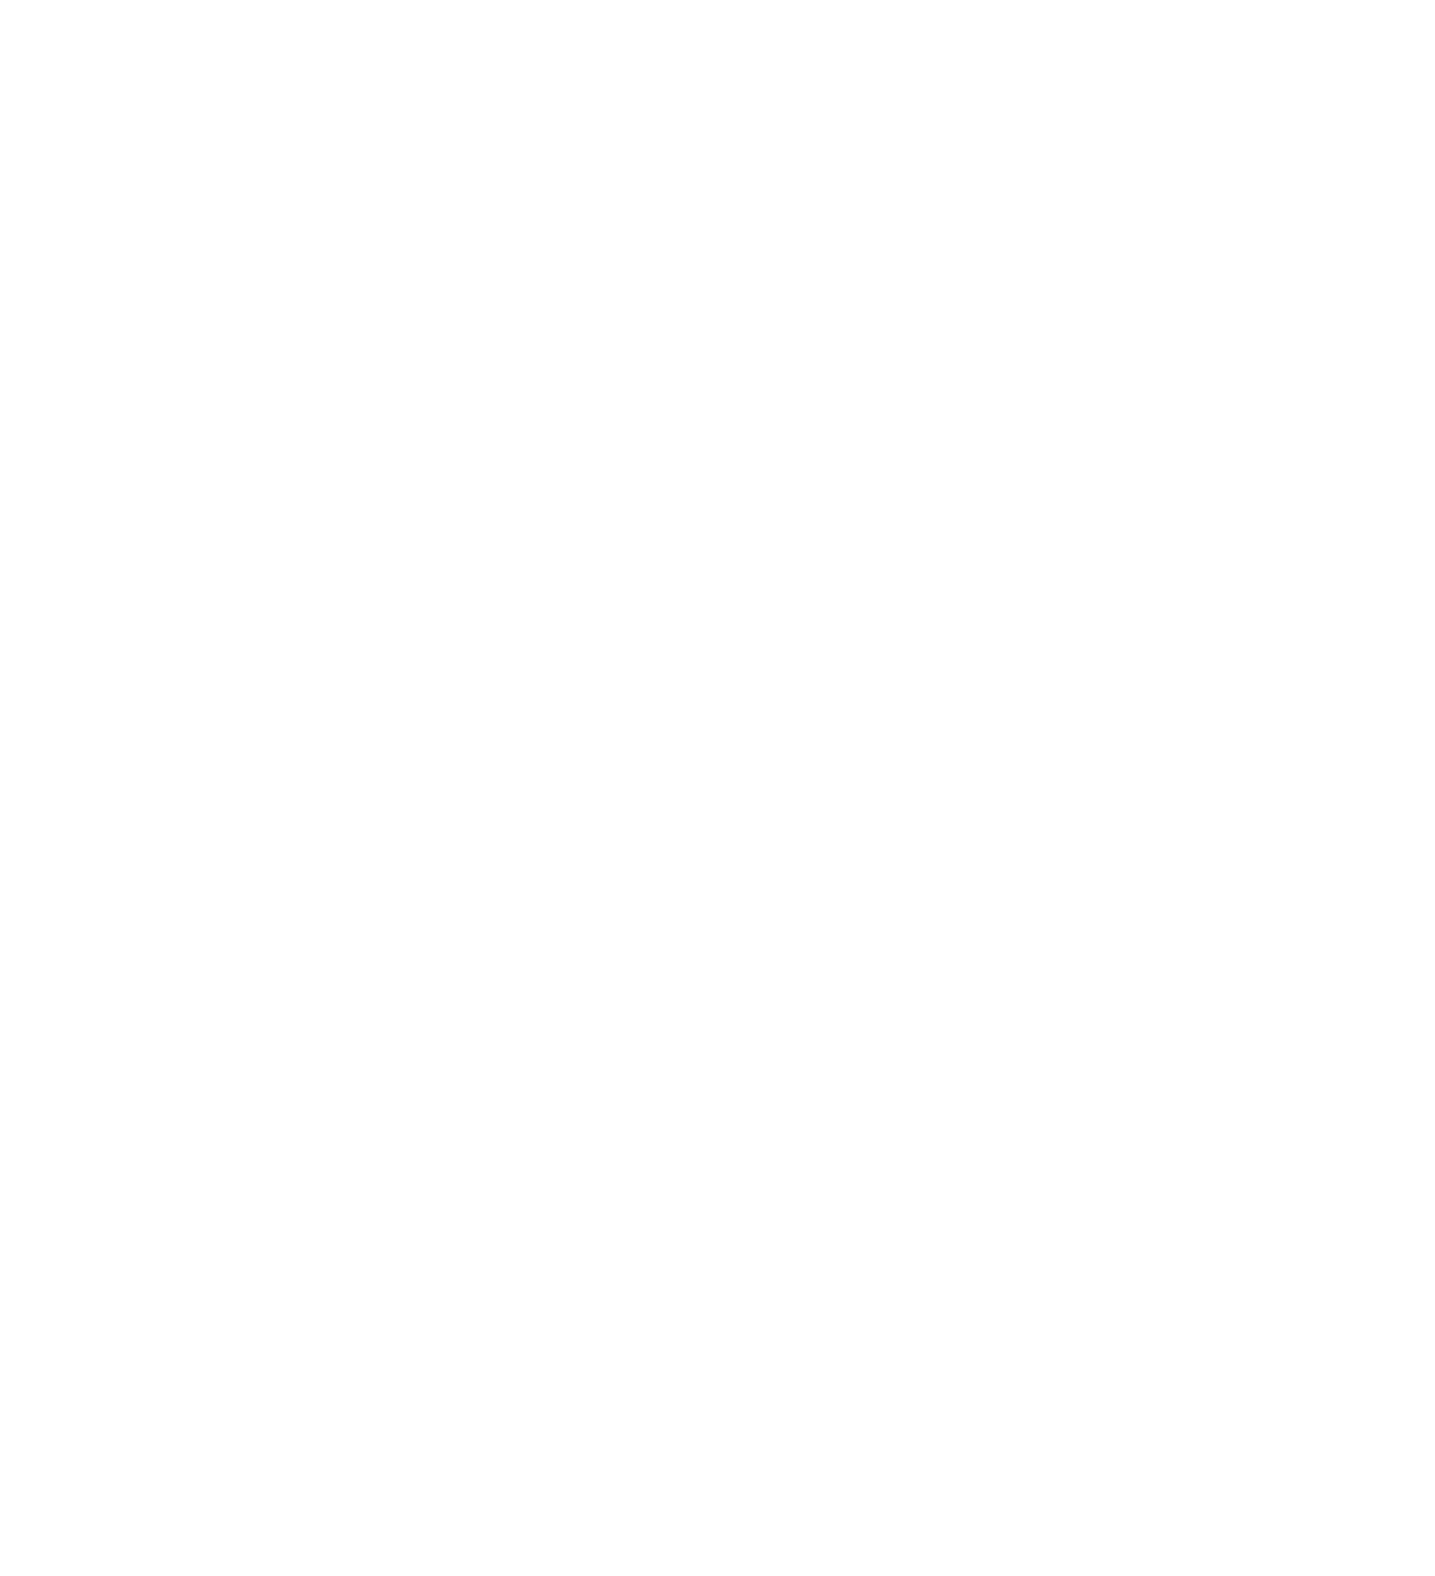 Vertical Aerospace logo for dark backgrounds (transparent PNG)